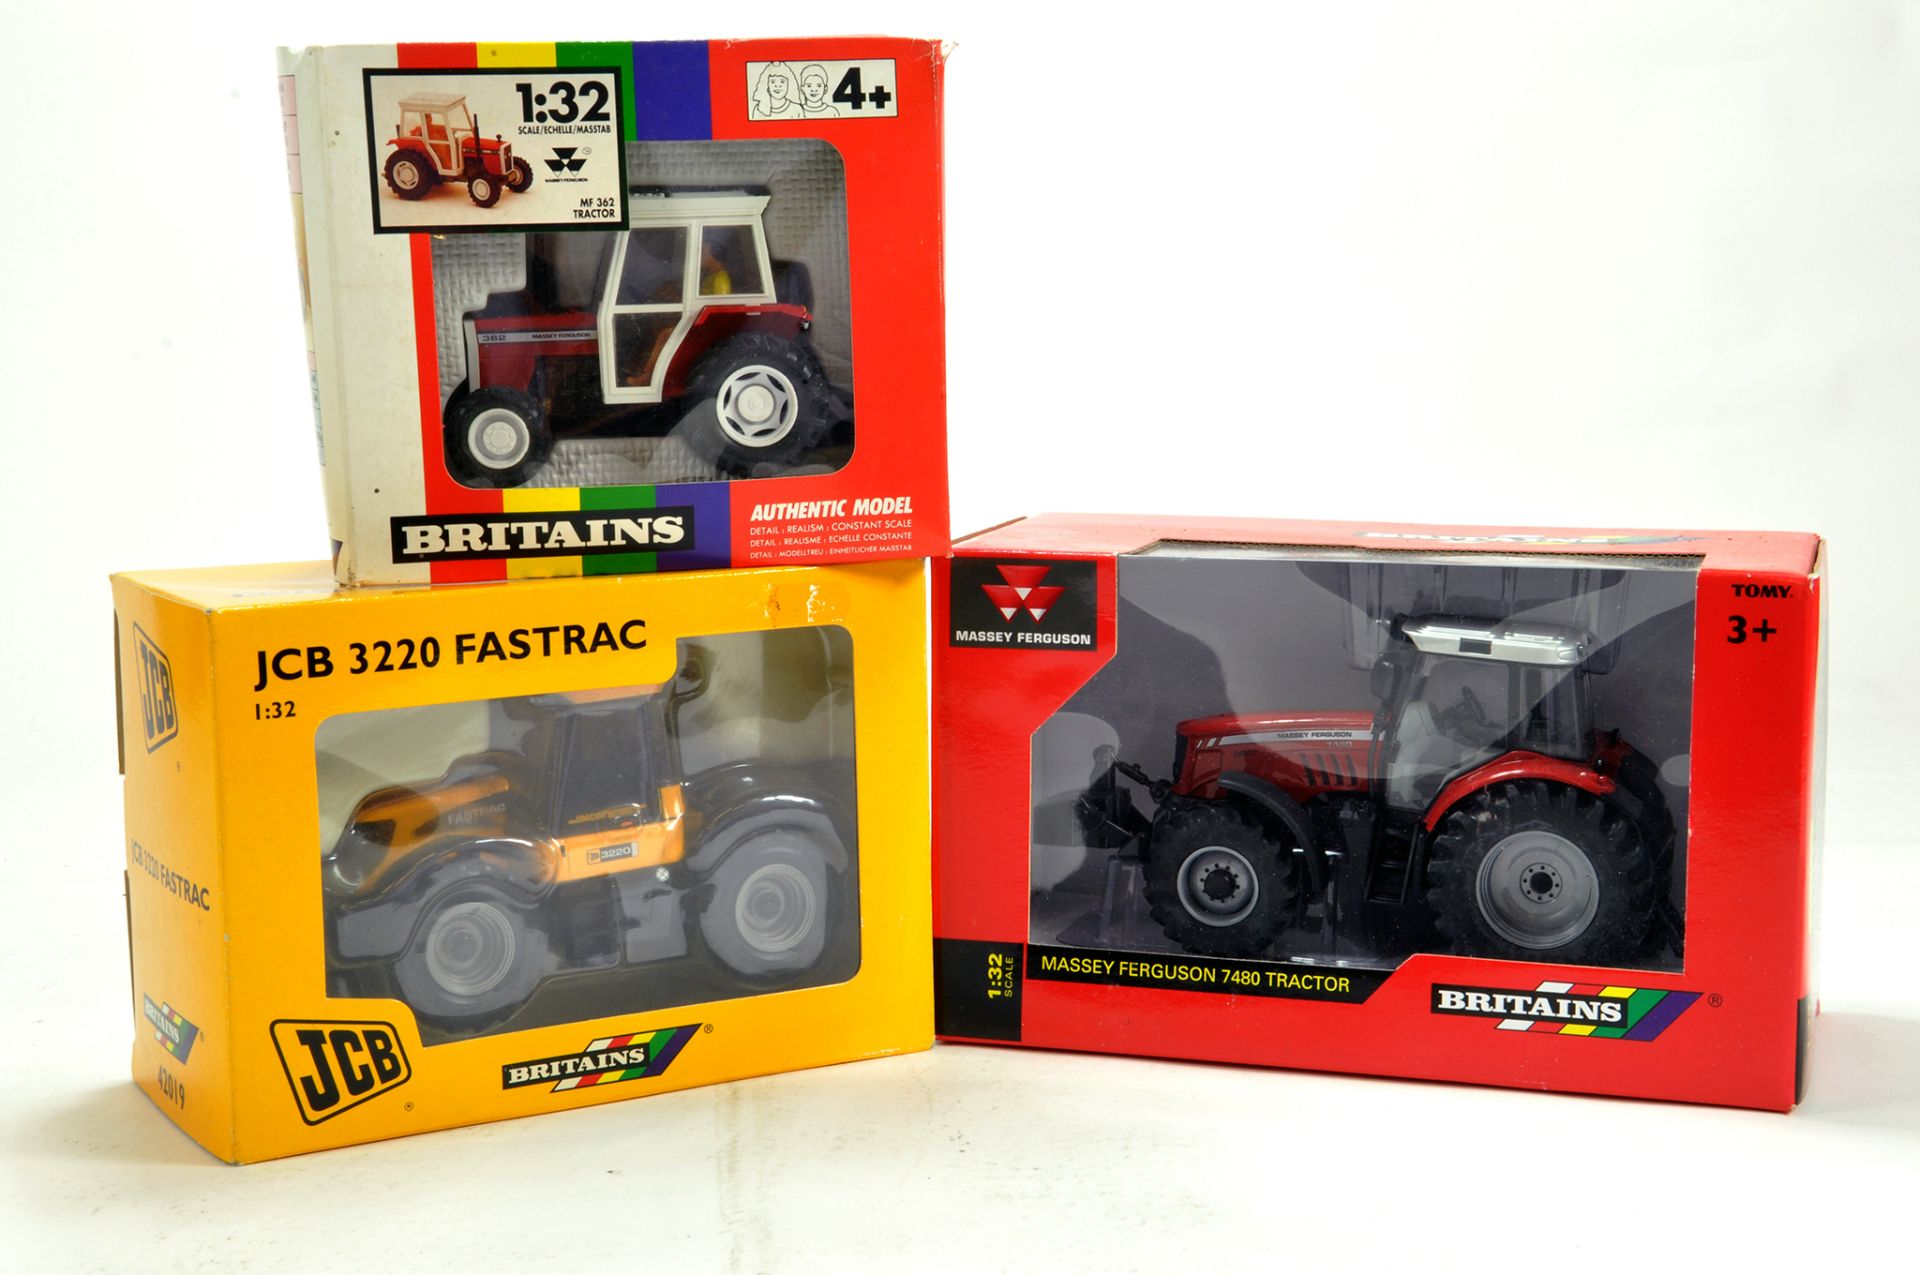 Britains Farm issue trio comprising JCB 3220 Fastrac, Massey Ferguson 7480 Tractor and Massey